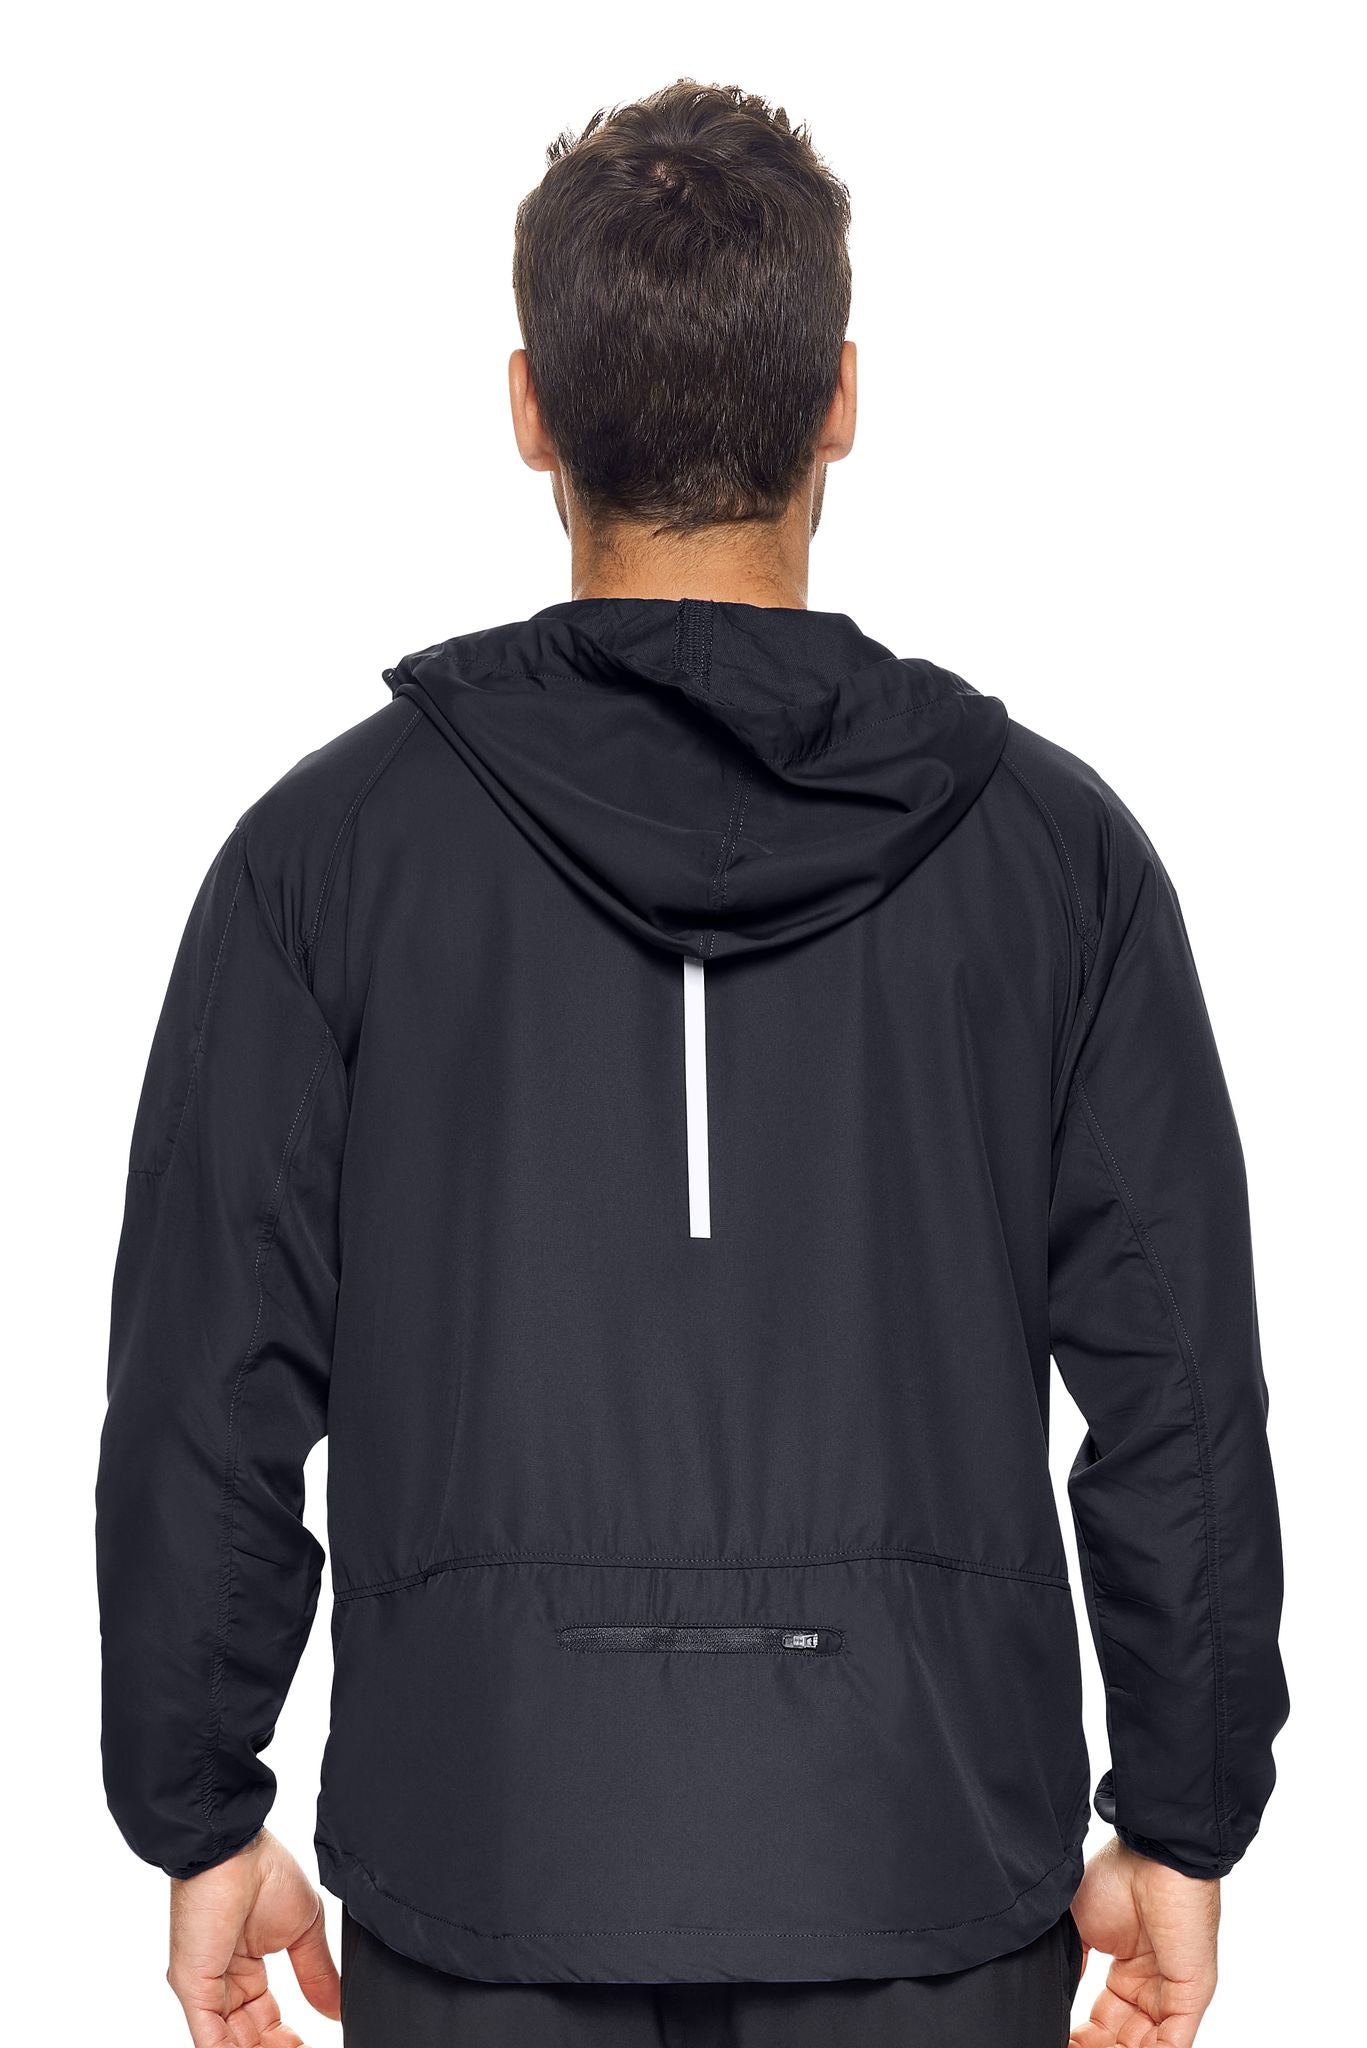 WA942 Water Resistant Hooded Swift Running Jacket - Expert Brand#black